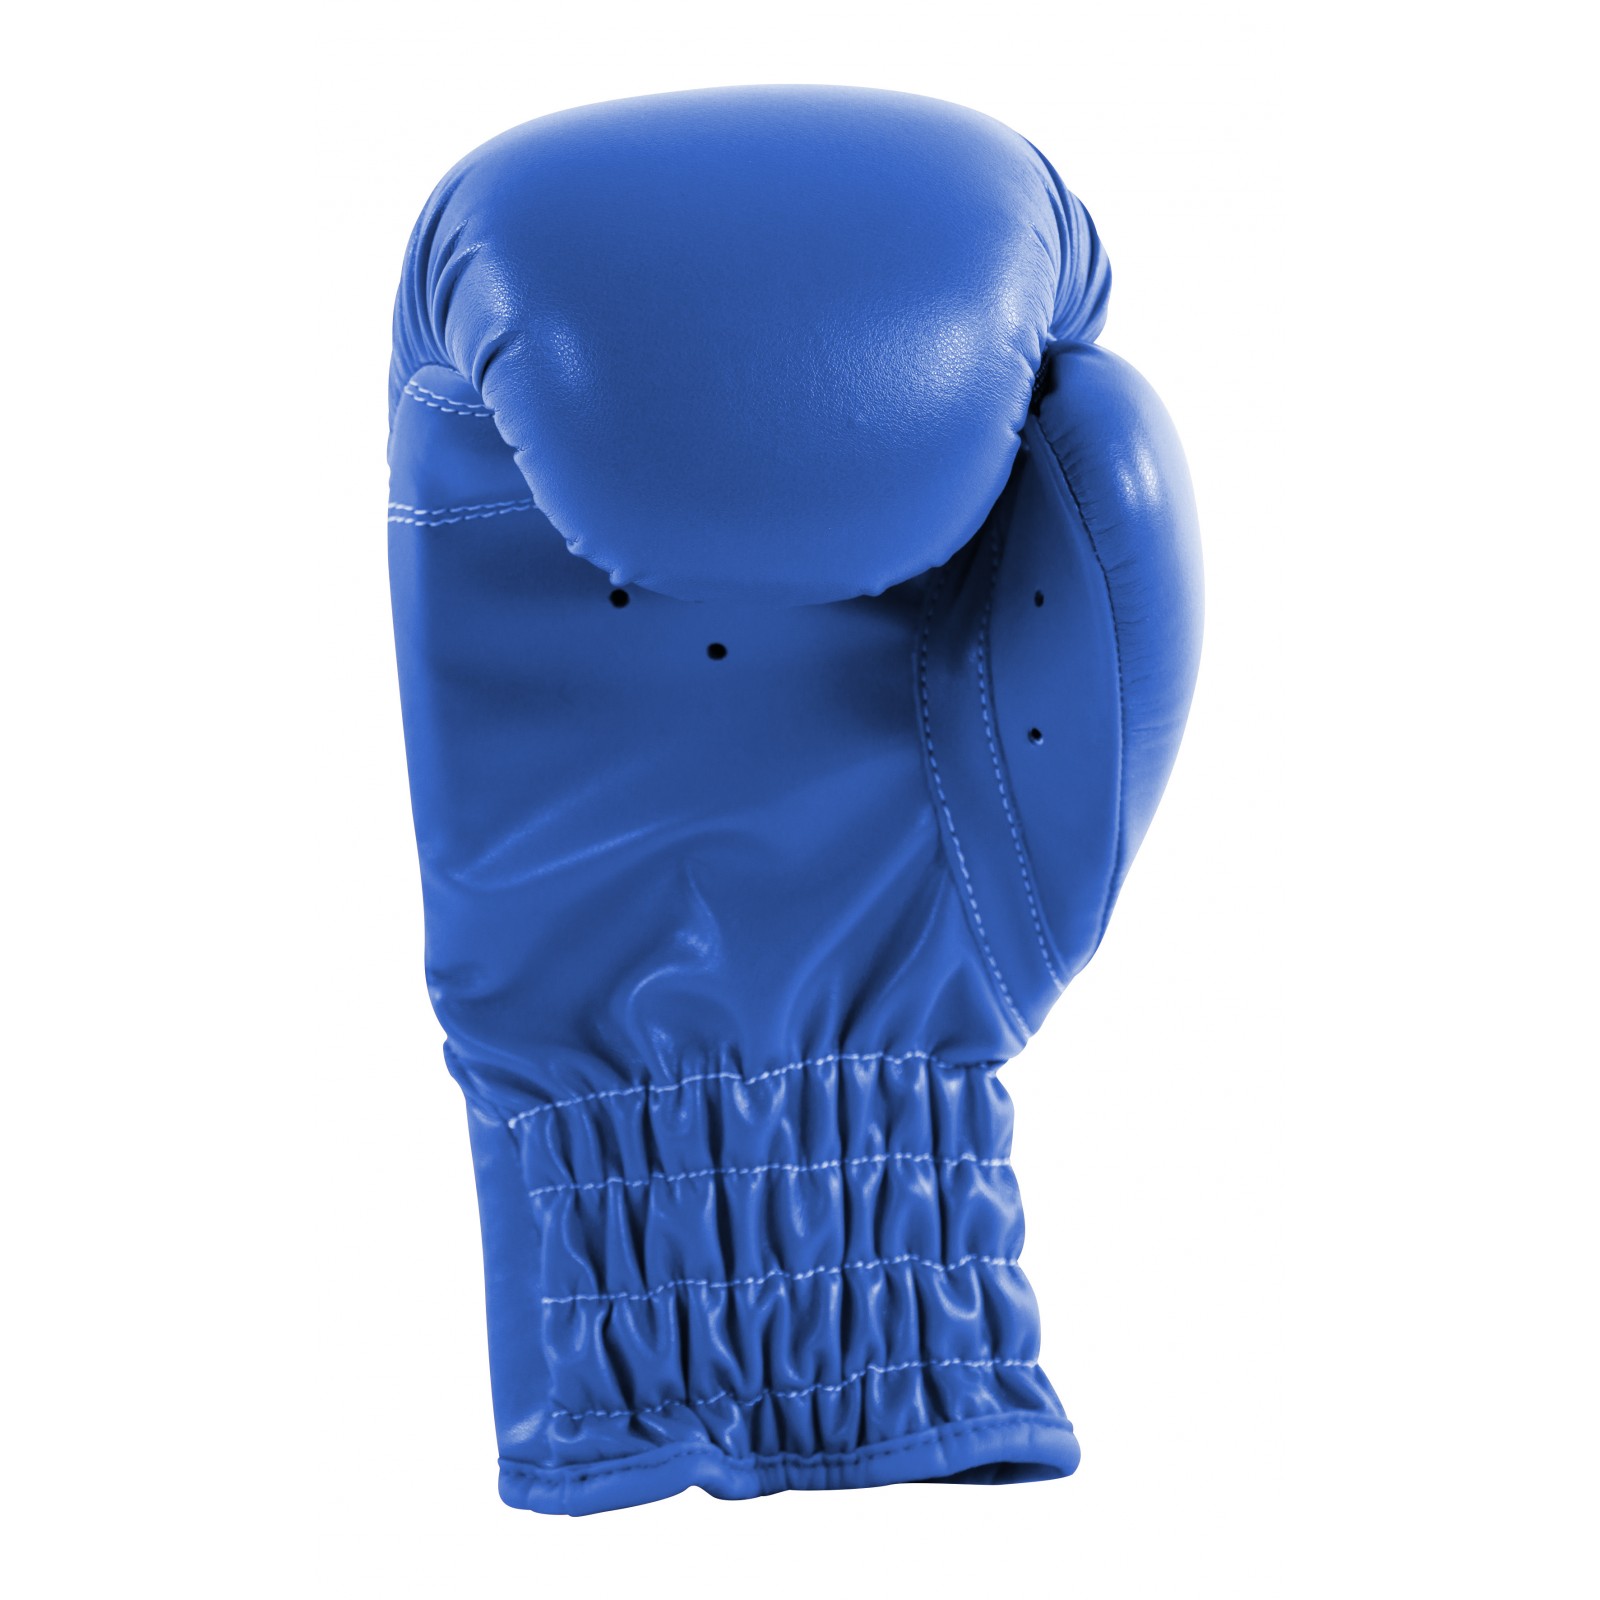 Adidas boxing glove Rookie-2 - Fitshop